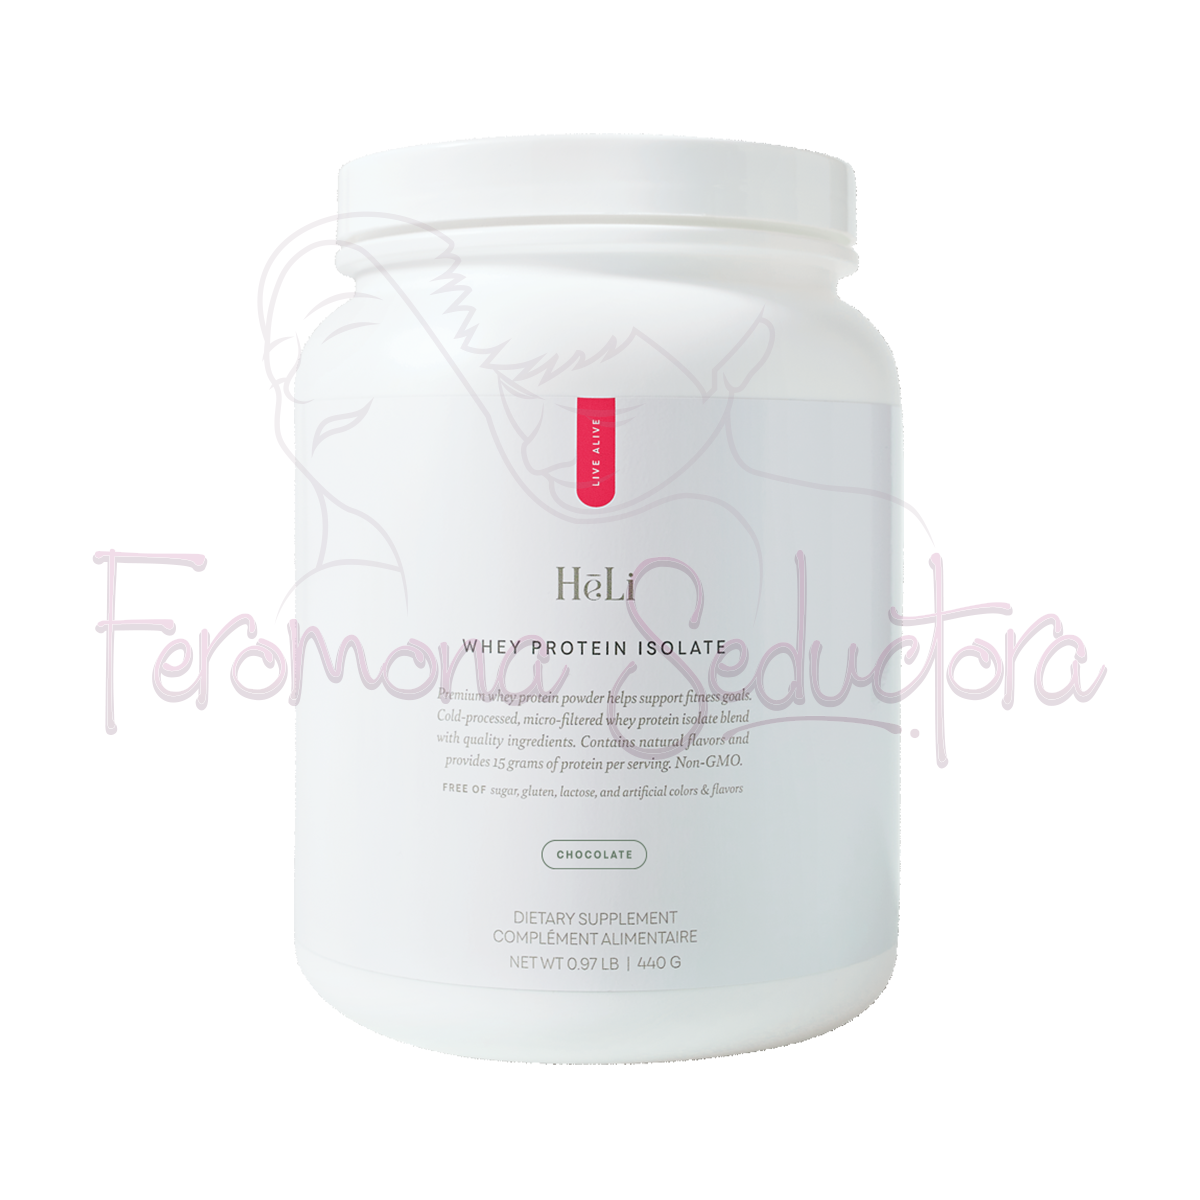 HēLi Dietary Supplement - Whey Protein Isolate